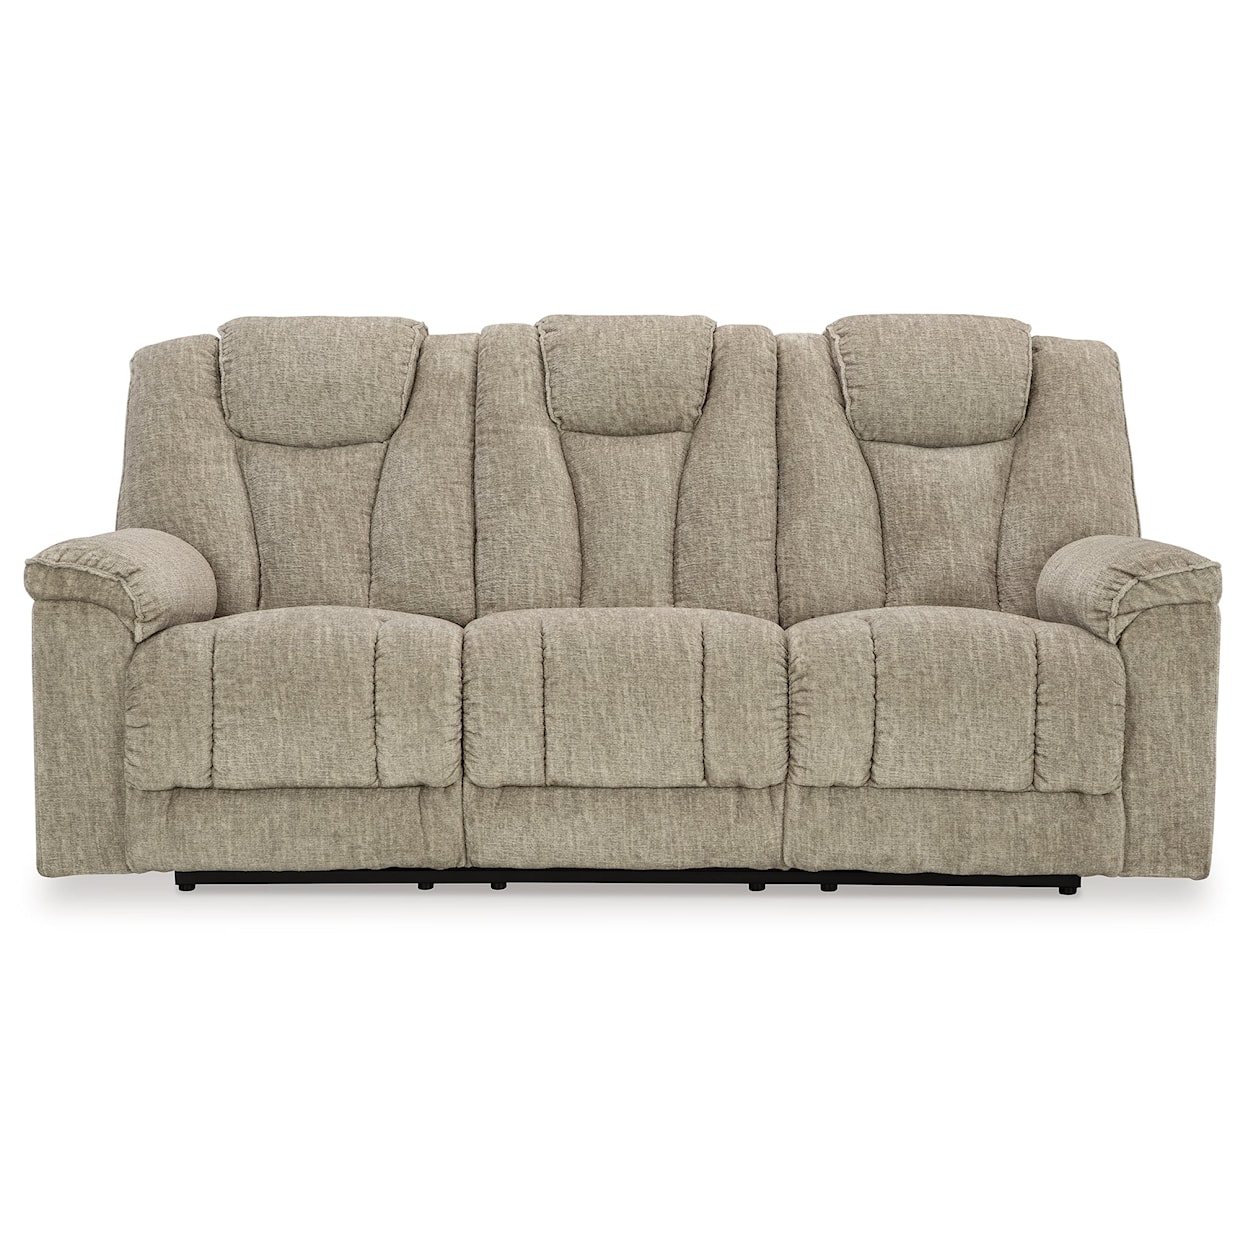 Ashley Furniture Signature Design Hindmarsh Power Reclining Sofa